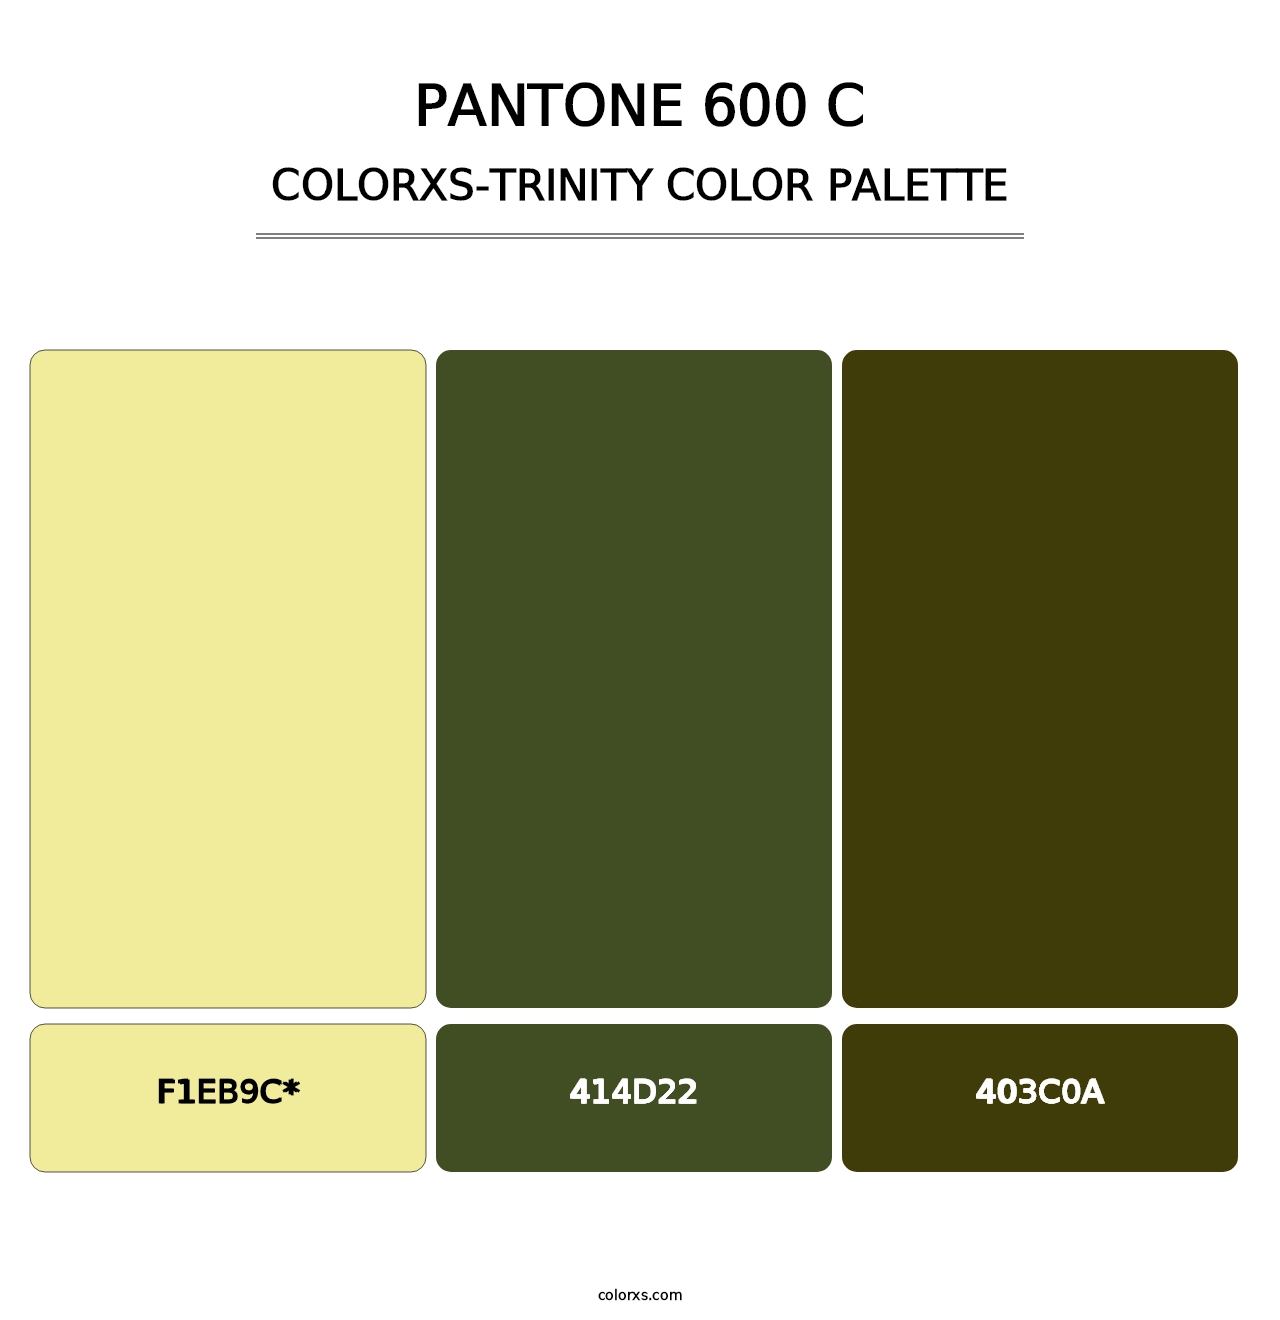 PANTONE 600 C - Colorxs Trinity Palette